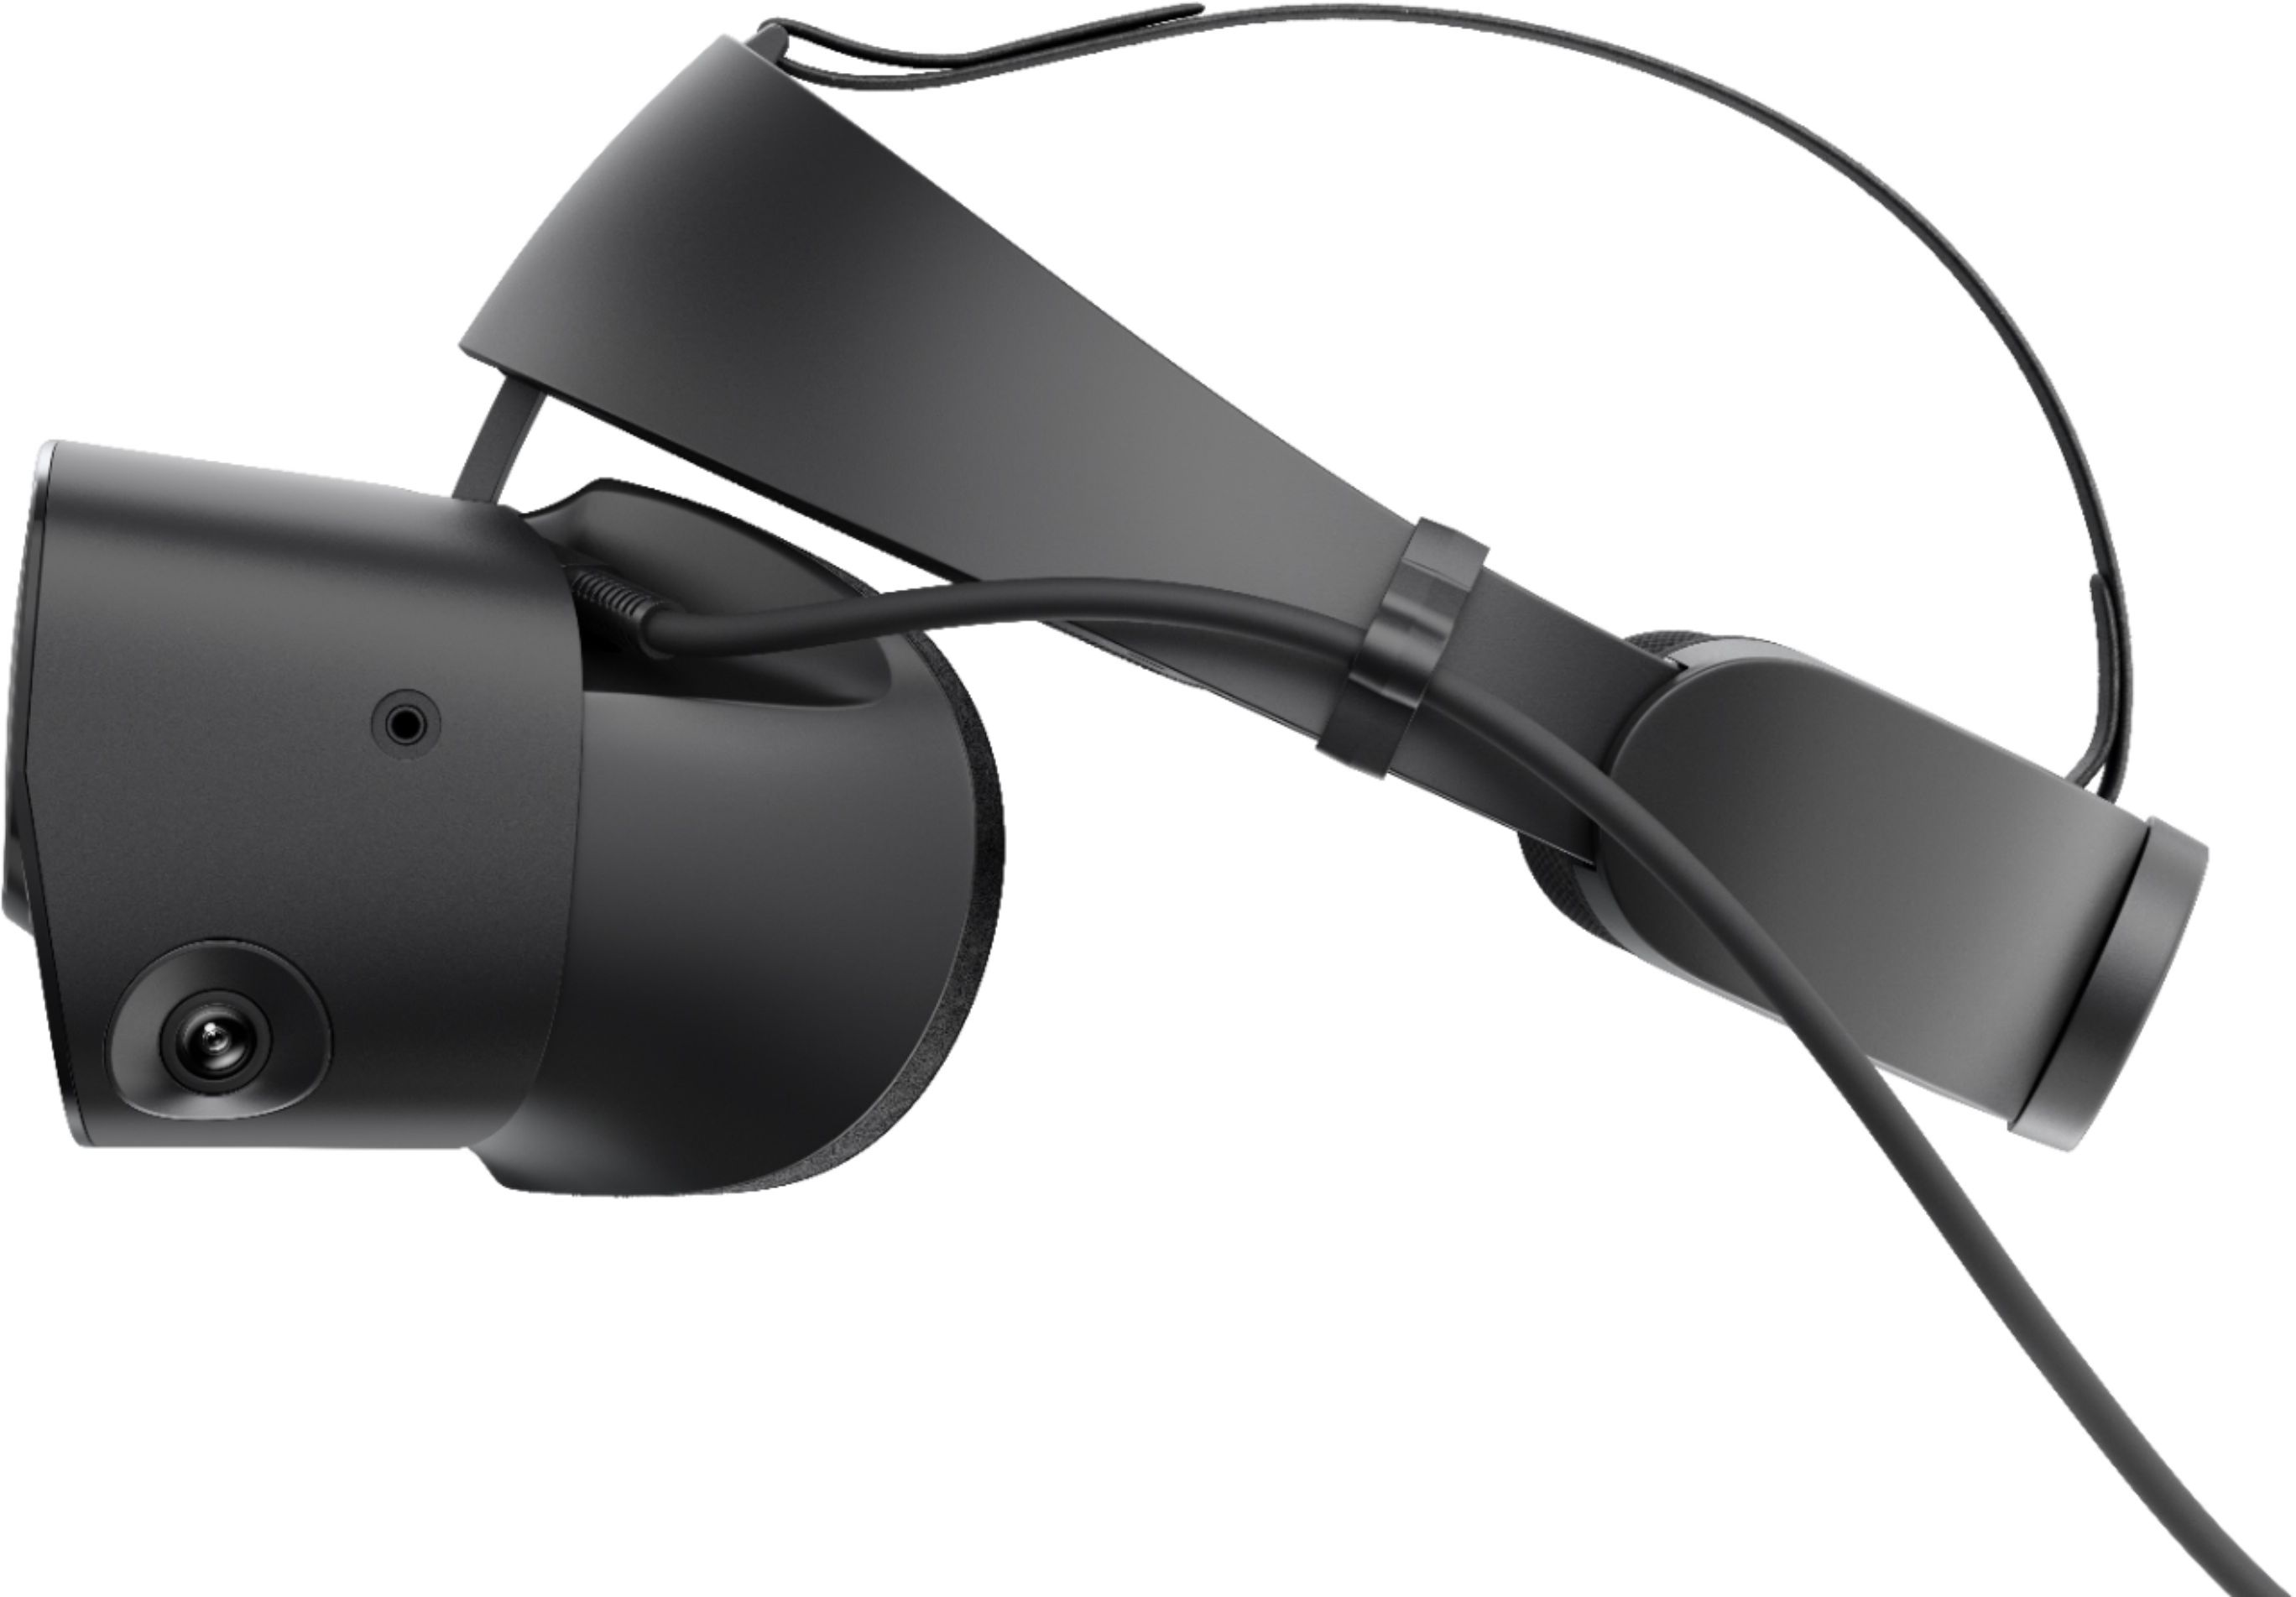 Conform bassin Kiks Best Buy: Oculus Rift S PC-Powered VR Gaming Headset Black 301-00178-01